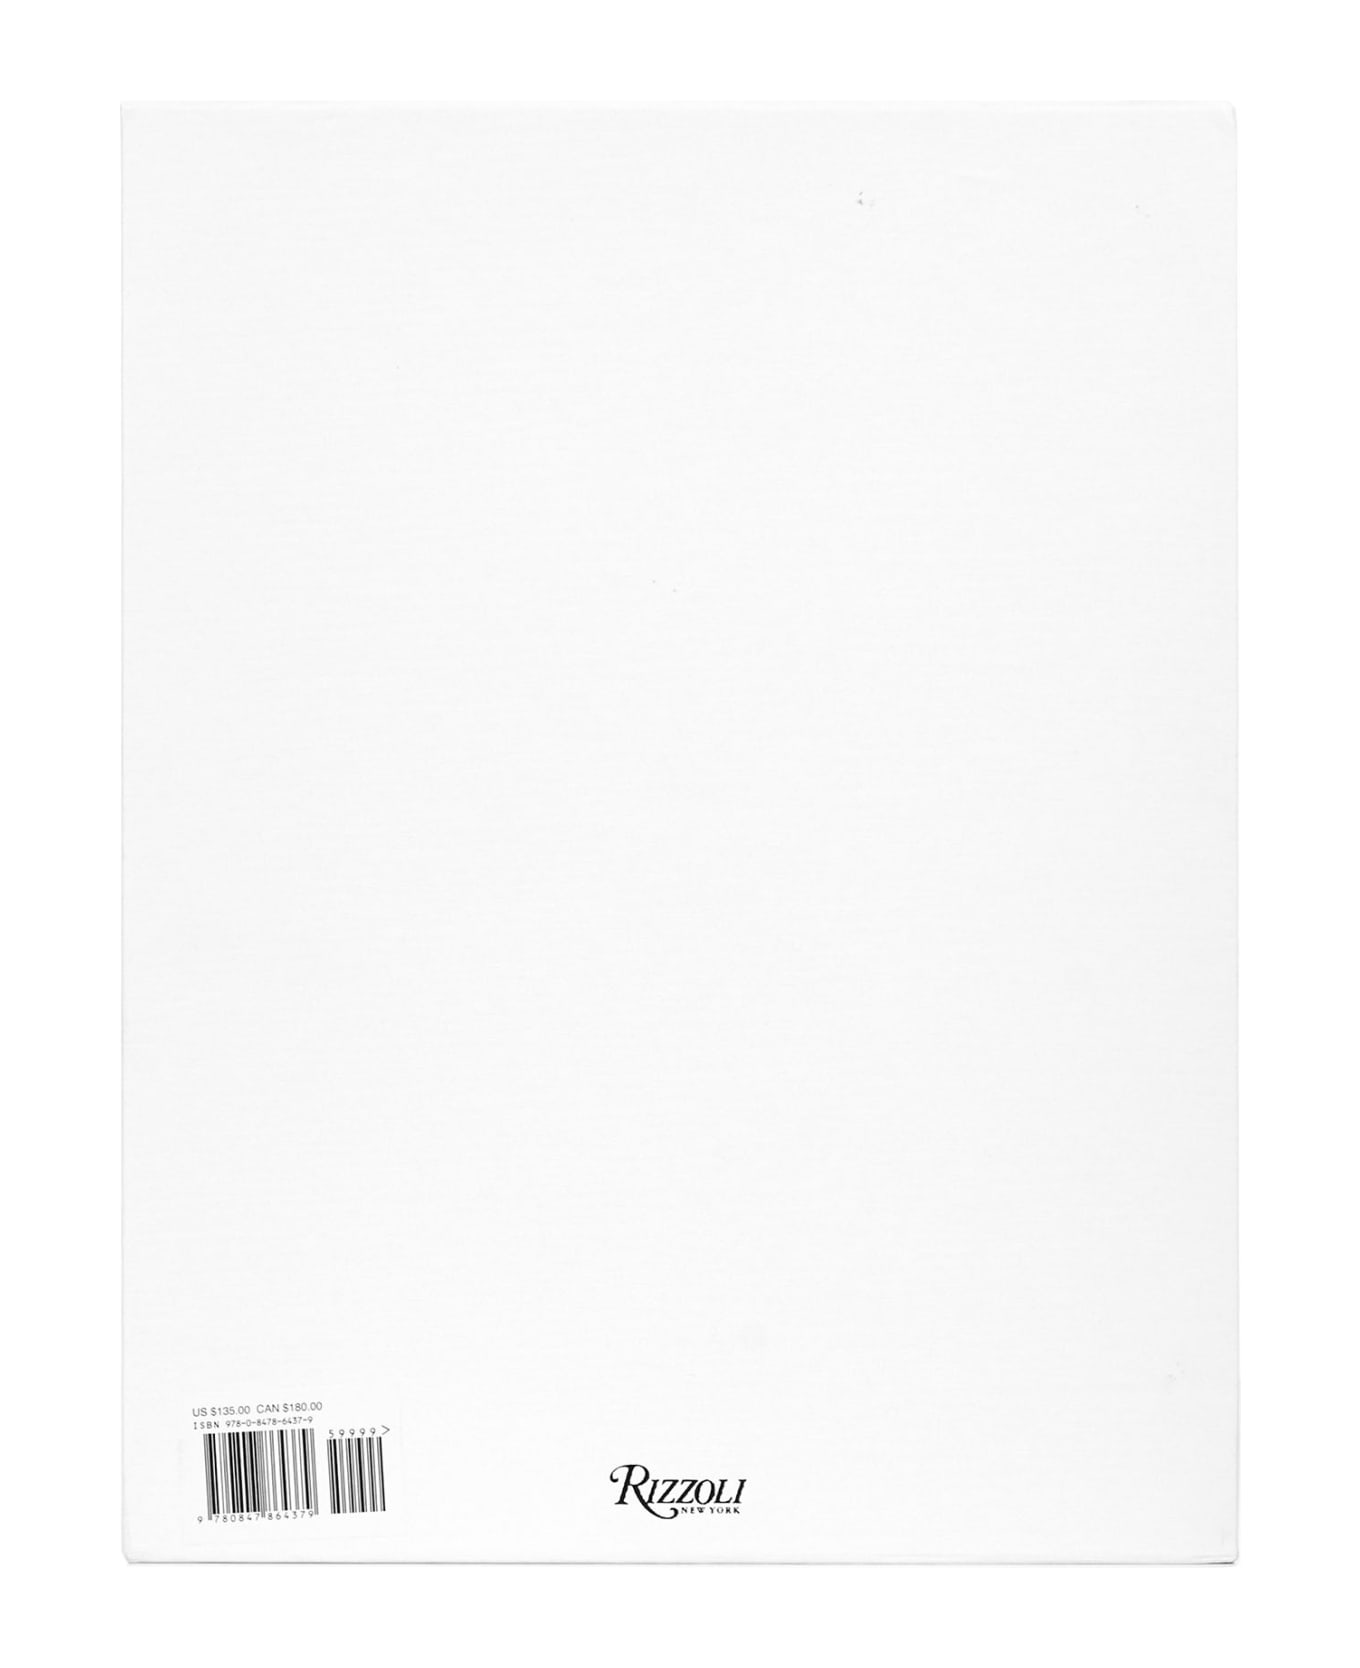 Tom Ford 002 Book - White